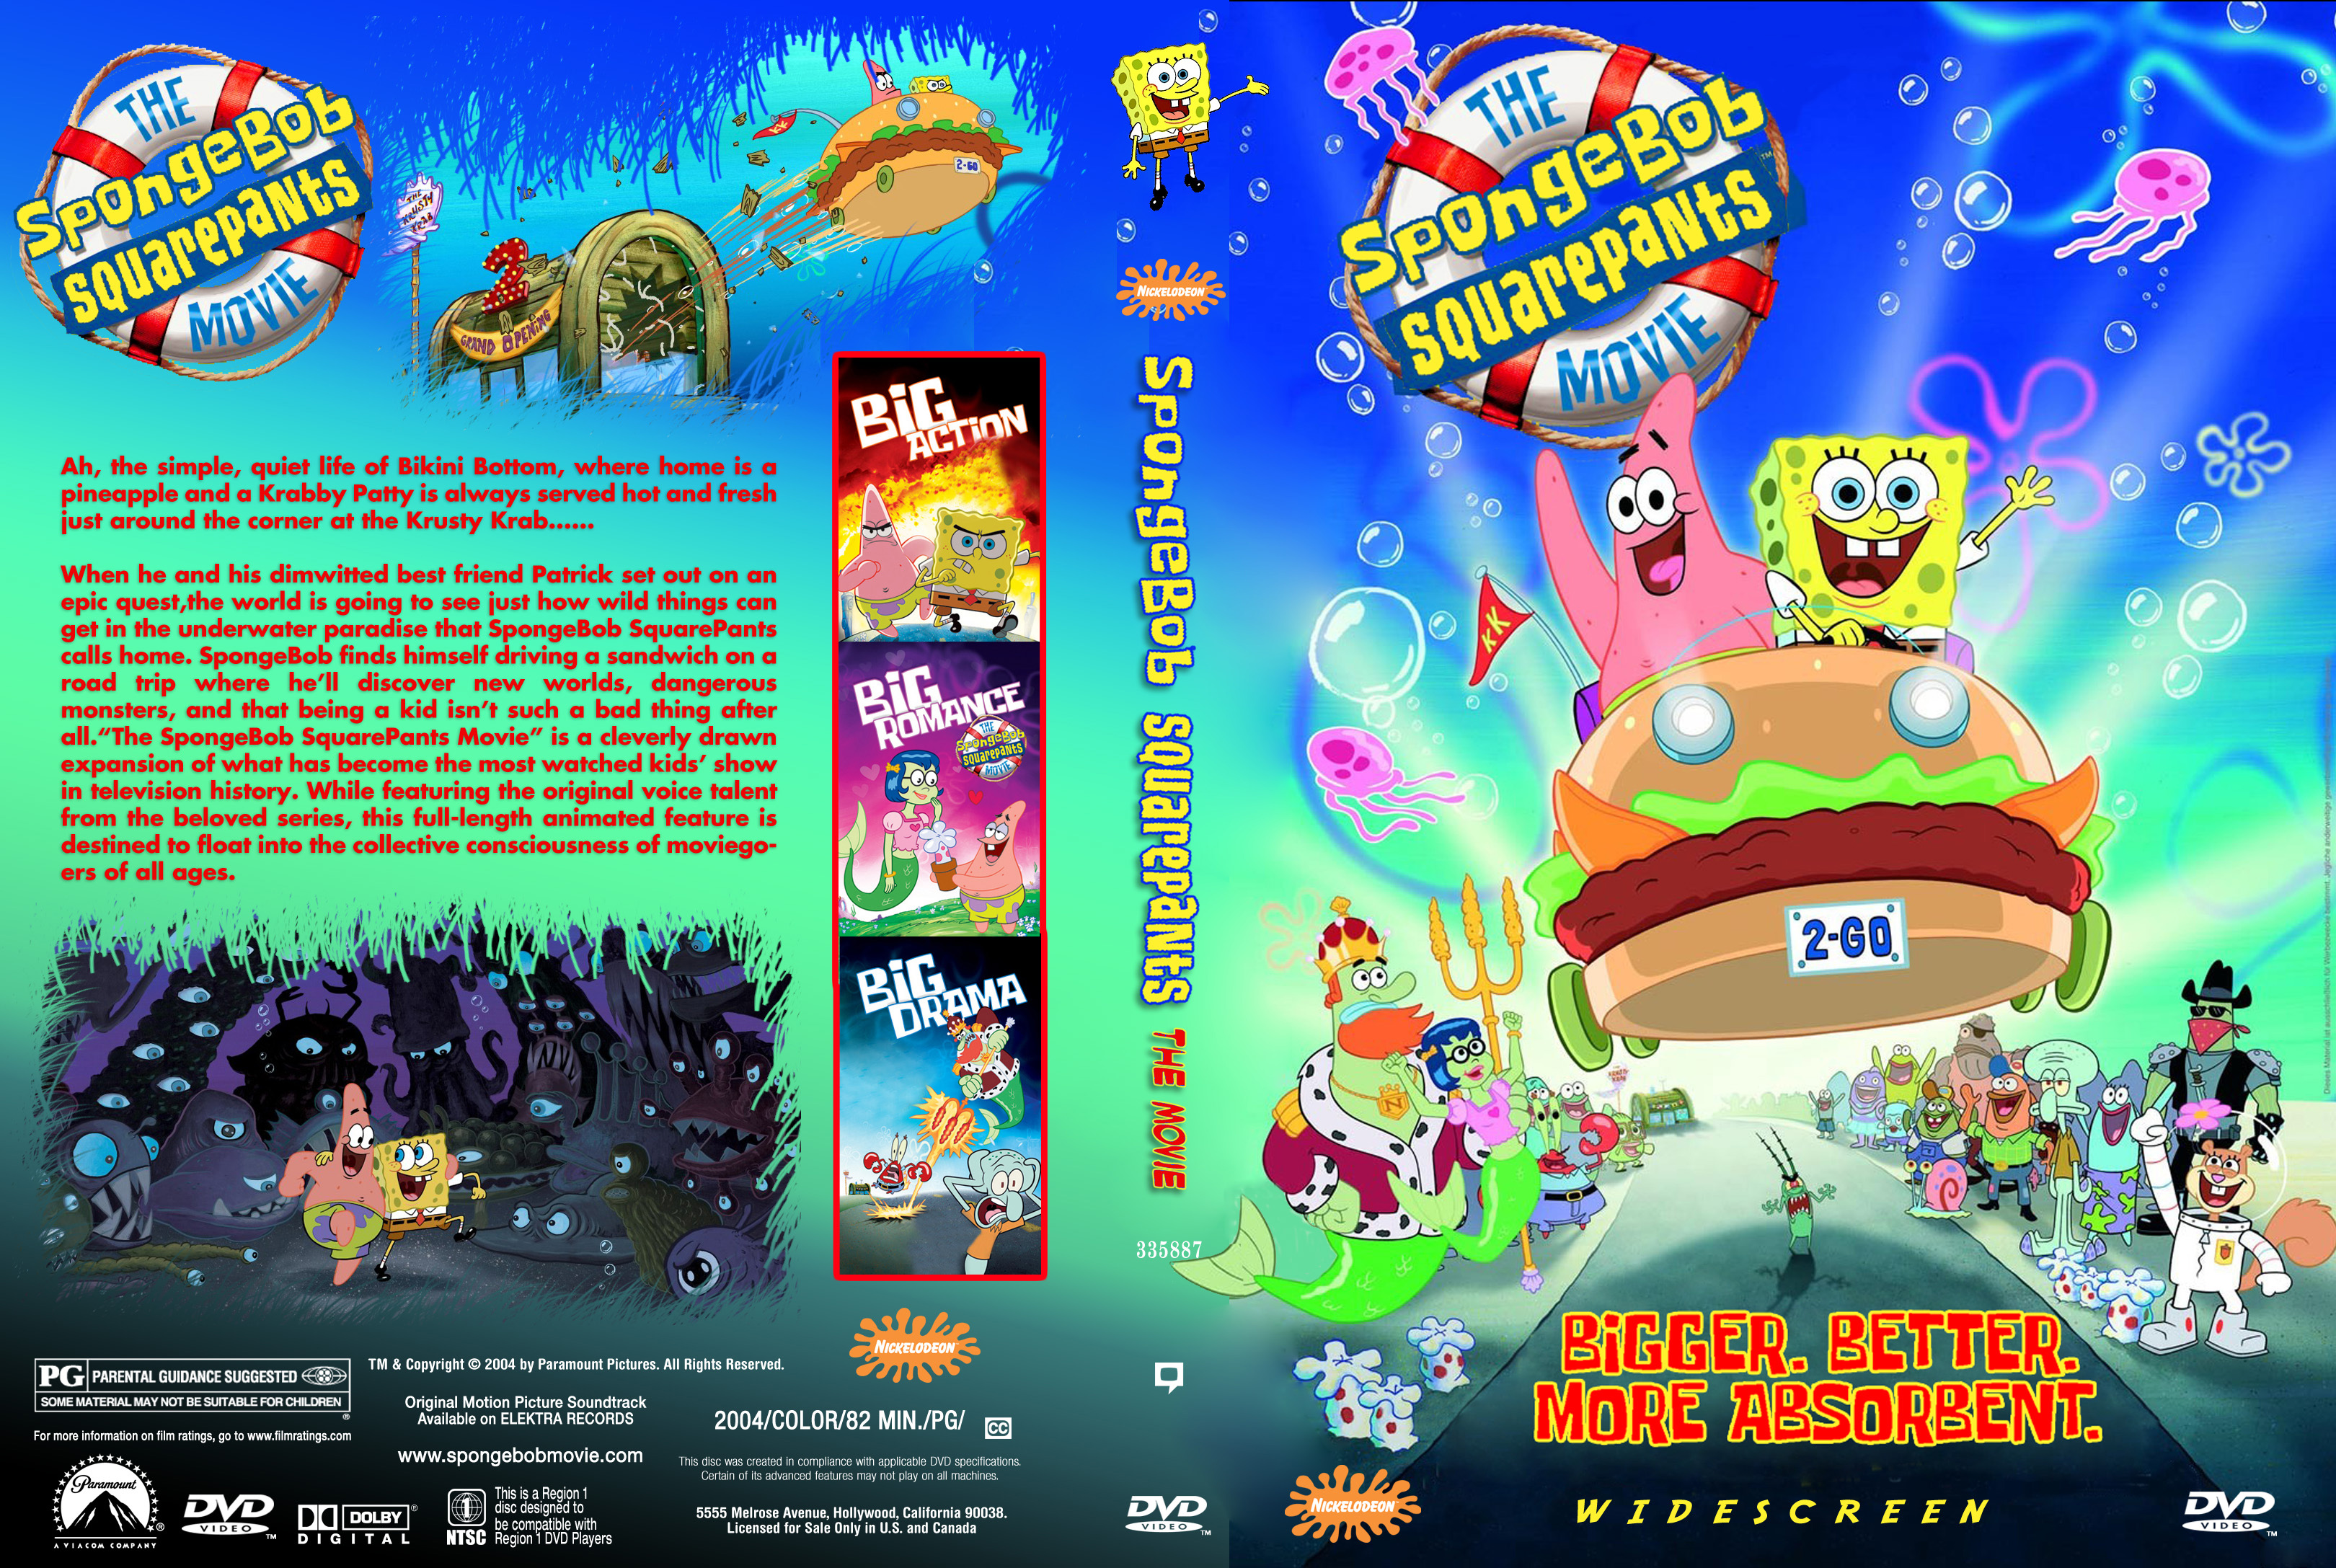 spongebob squarepants movie cover